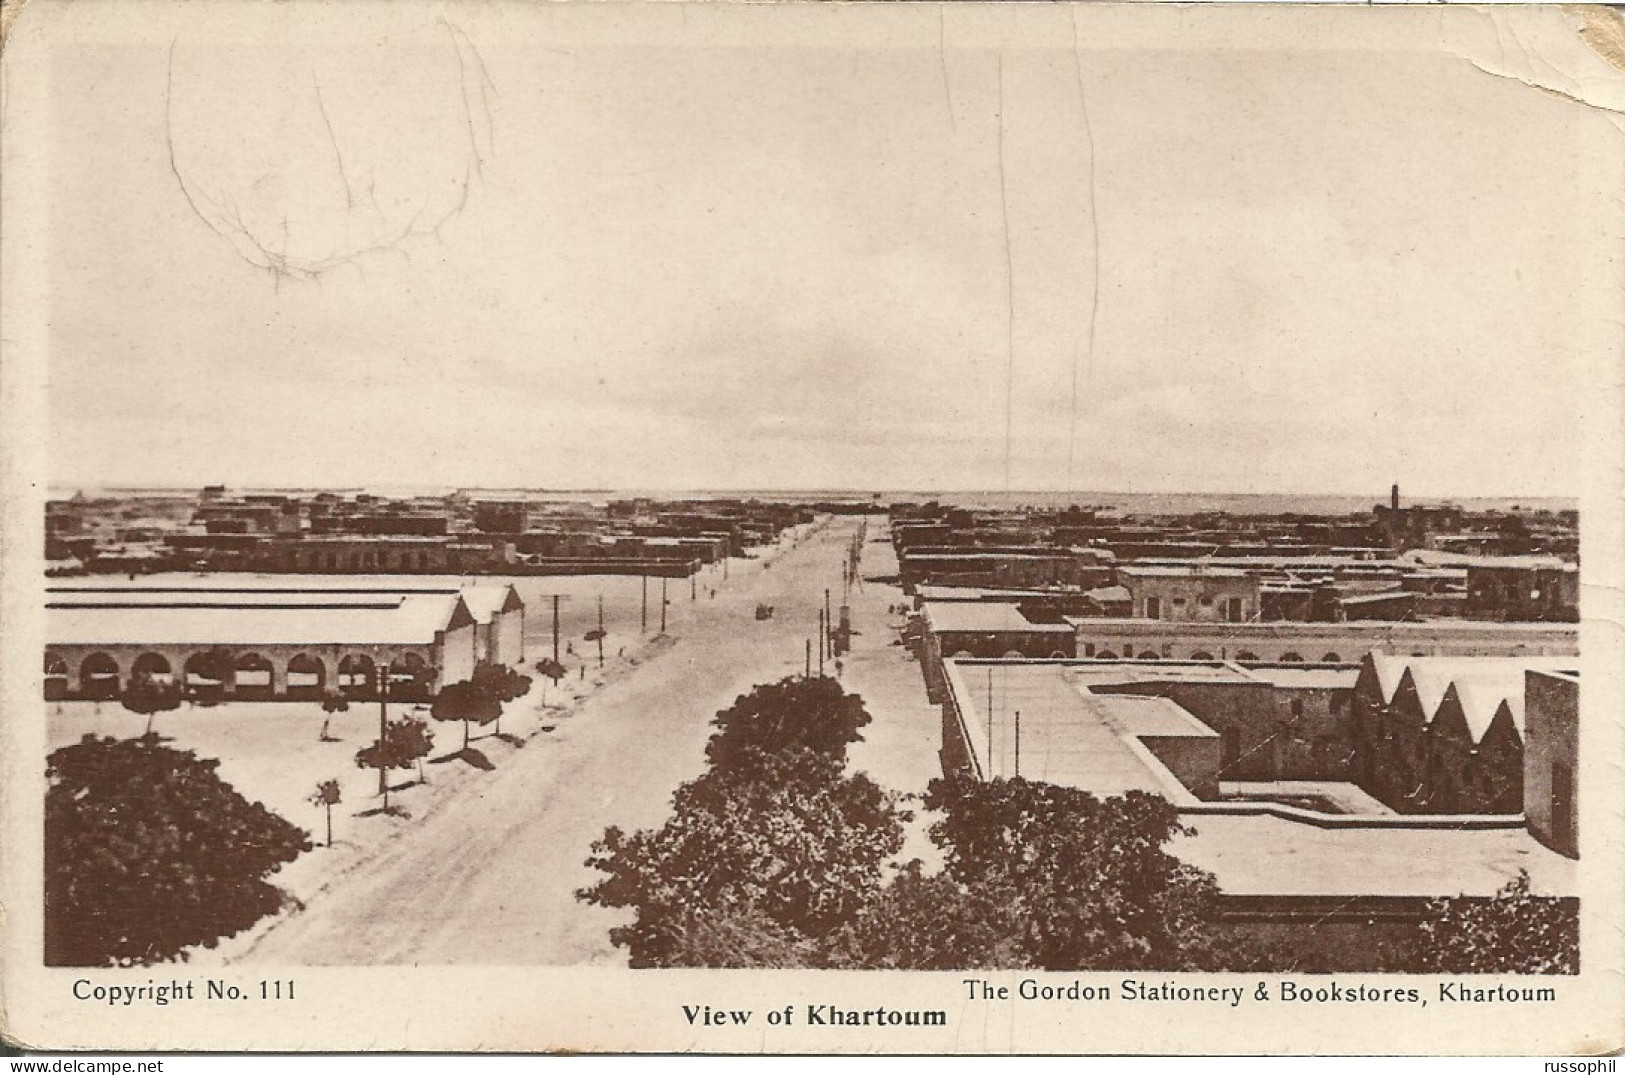 SOUDAN - SUDAN - VIEW OF KHARTOUM - PUB. THE GORDON STATIONERY AND BOOKSTORE N° 111 - 1927 - Sudán